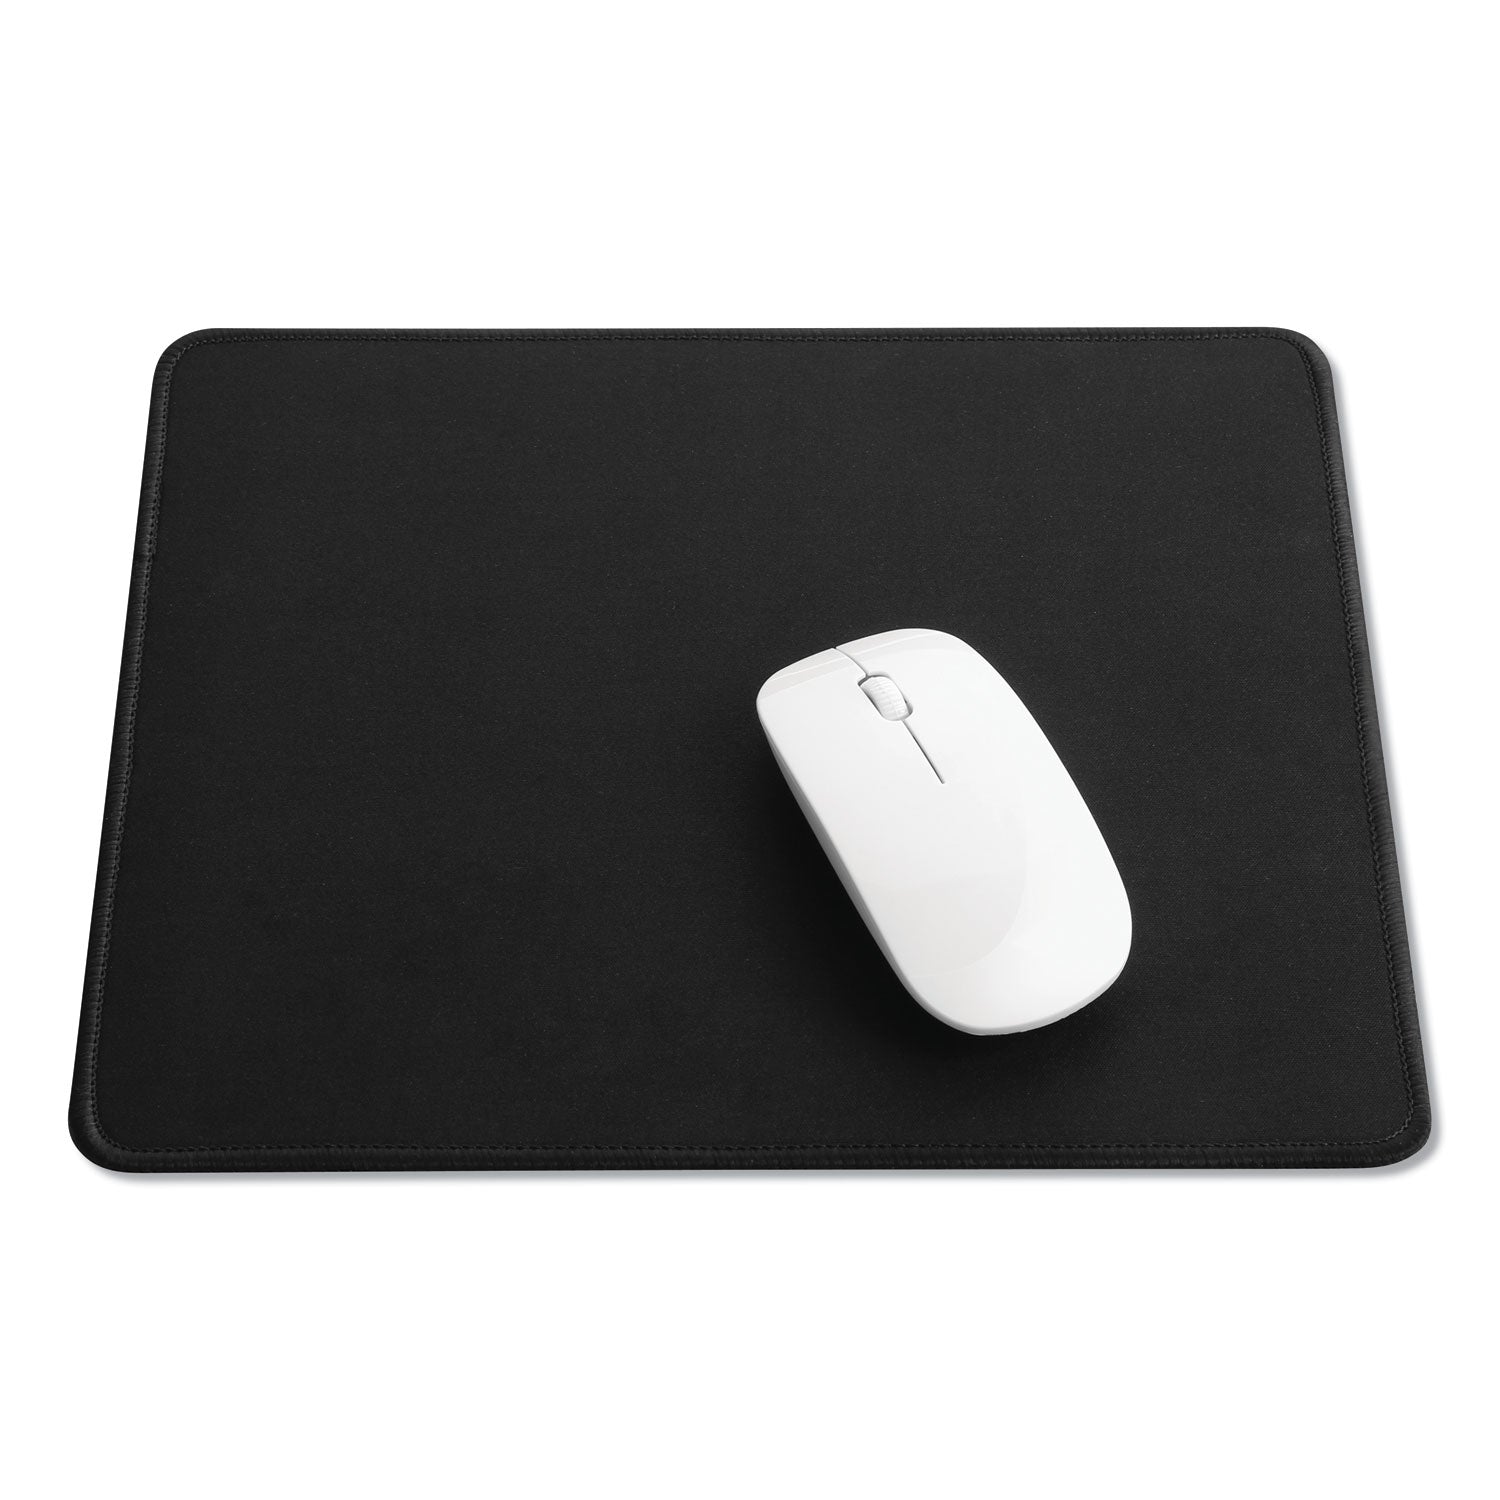 large-mouse-pad-987-x-1187-black_ivr52600 - 4